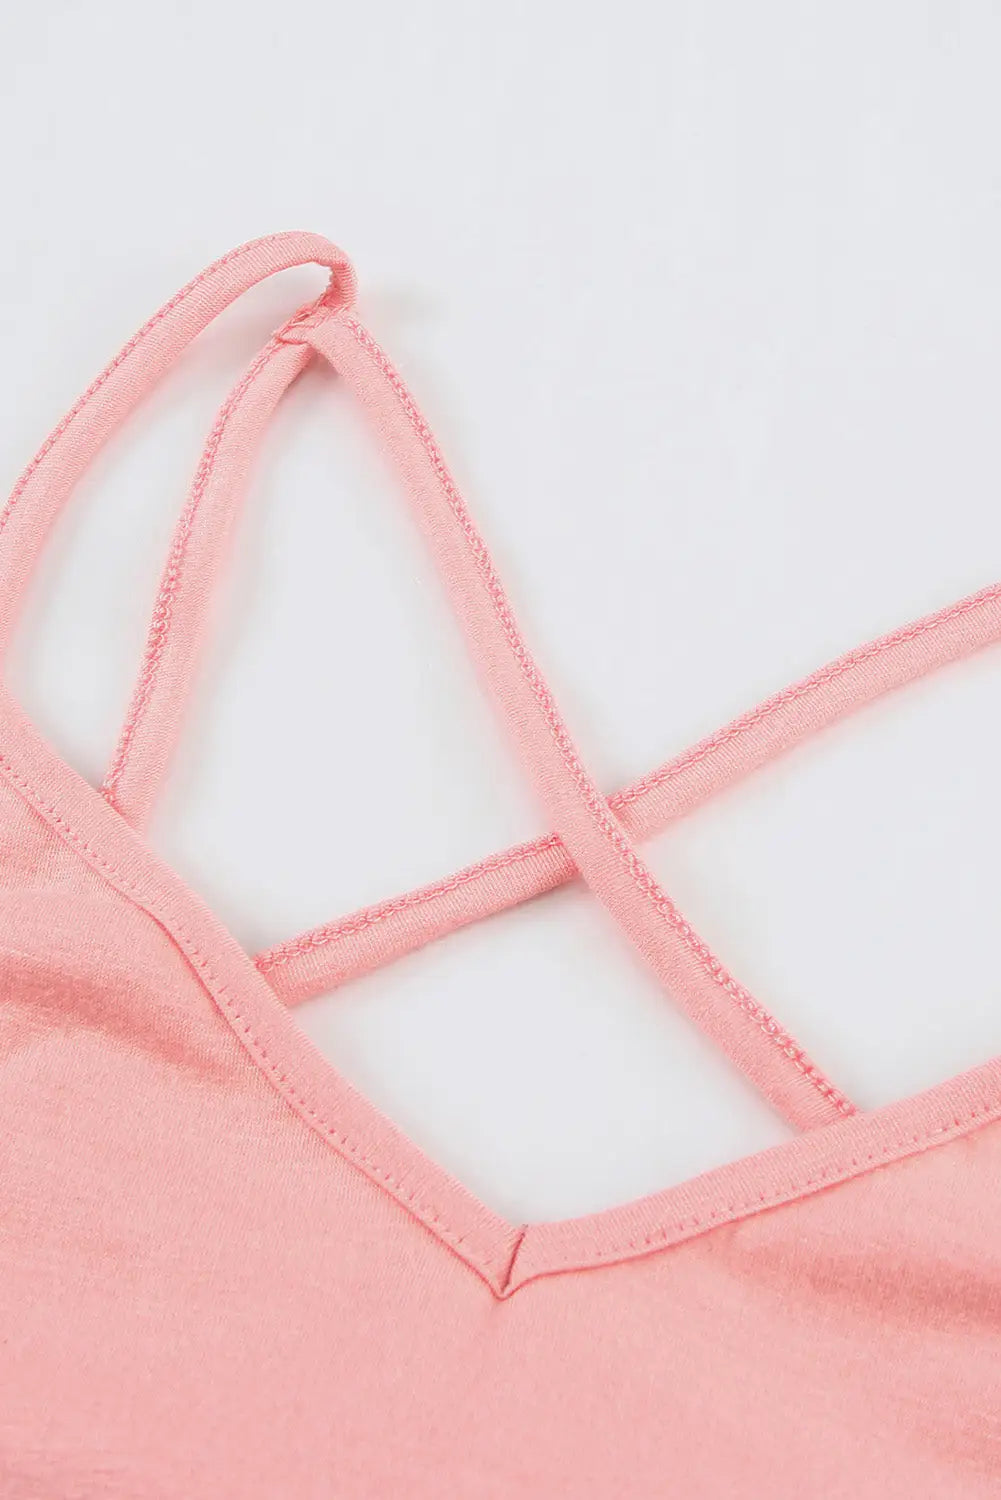 Pink spaghetti straps v neck crisscross back romper - jumpsuits & rompers